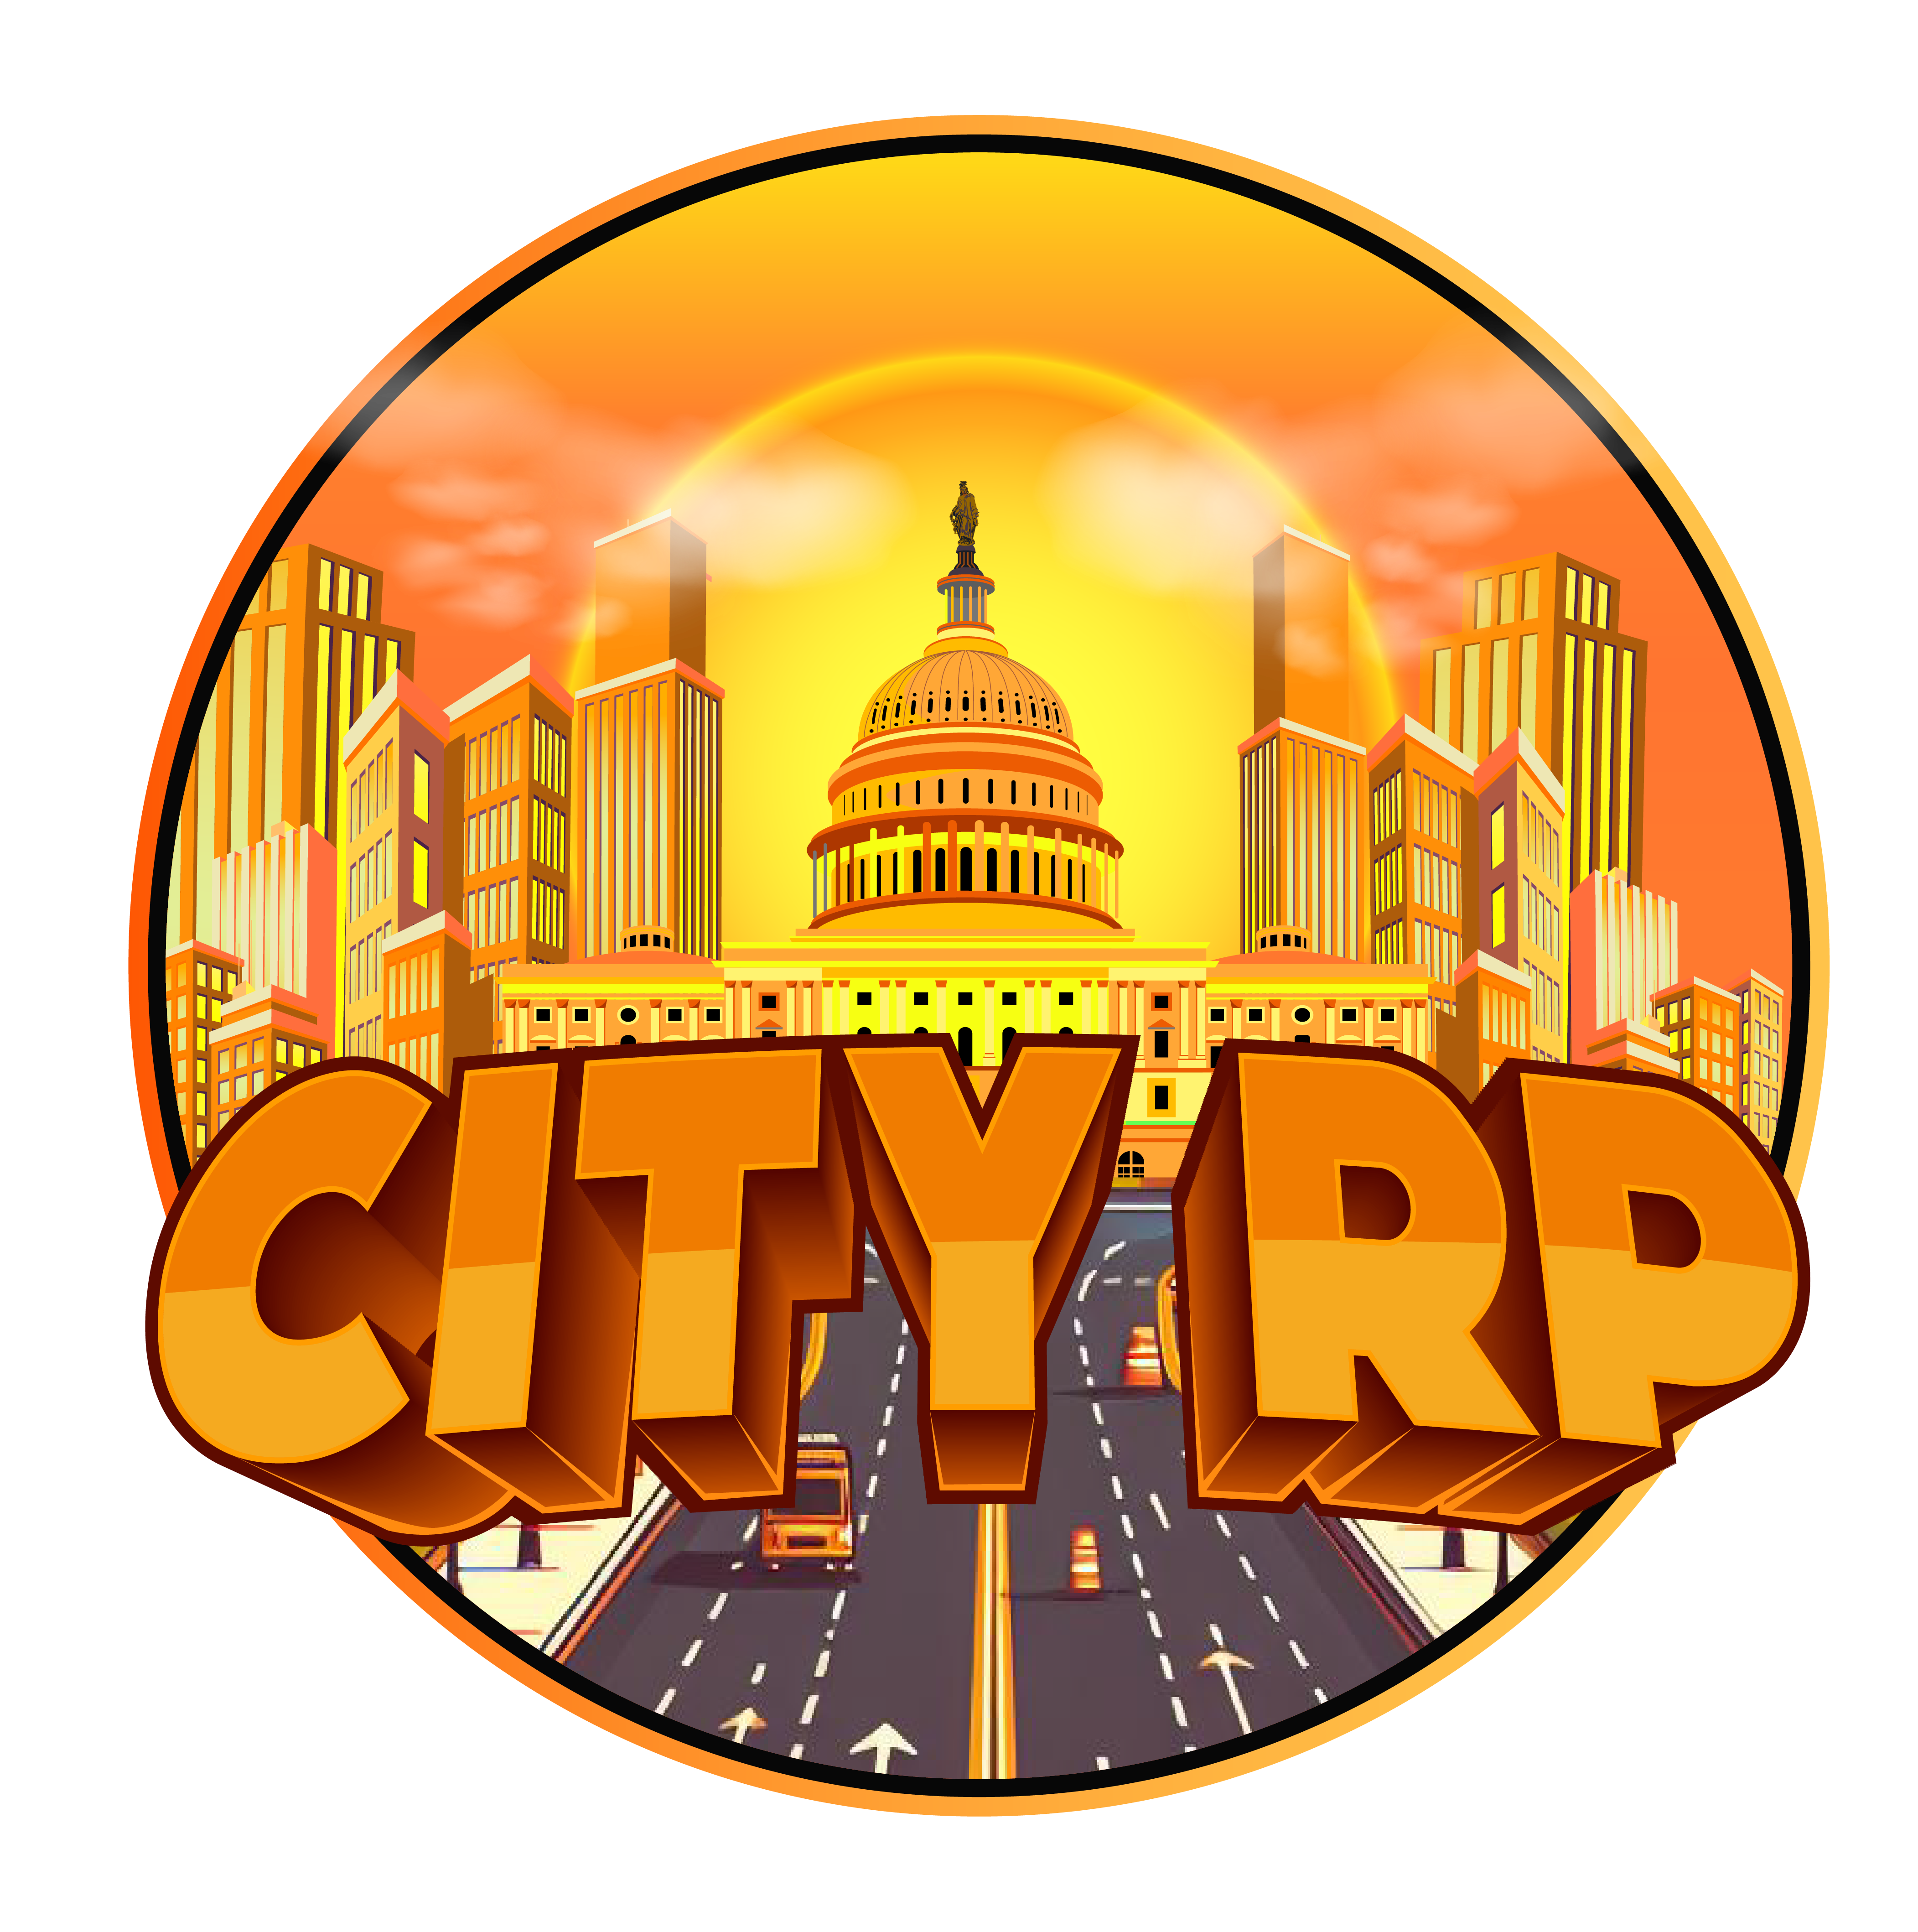 CityRP